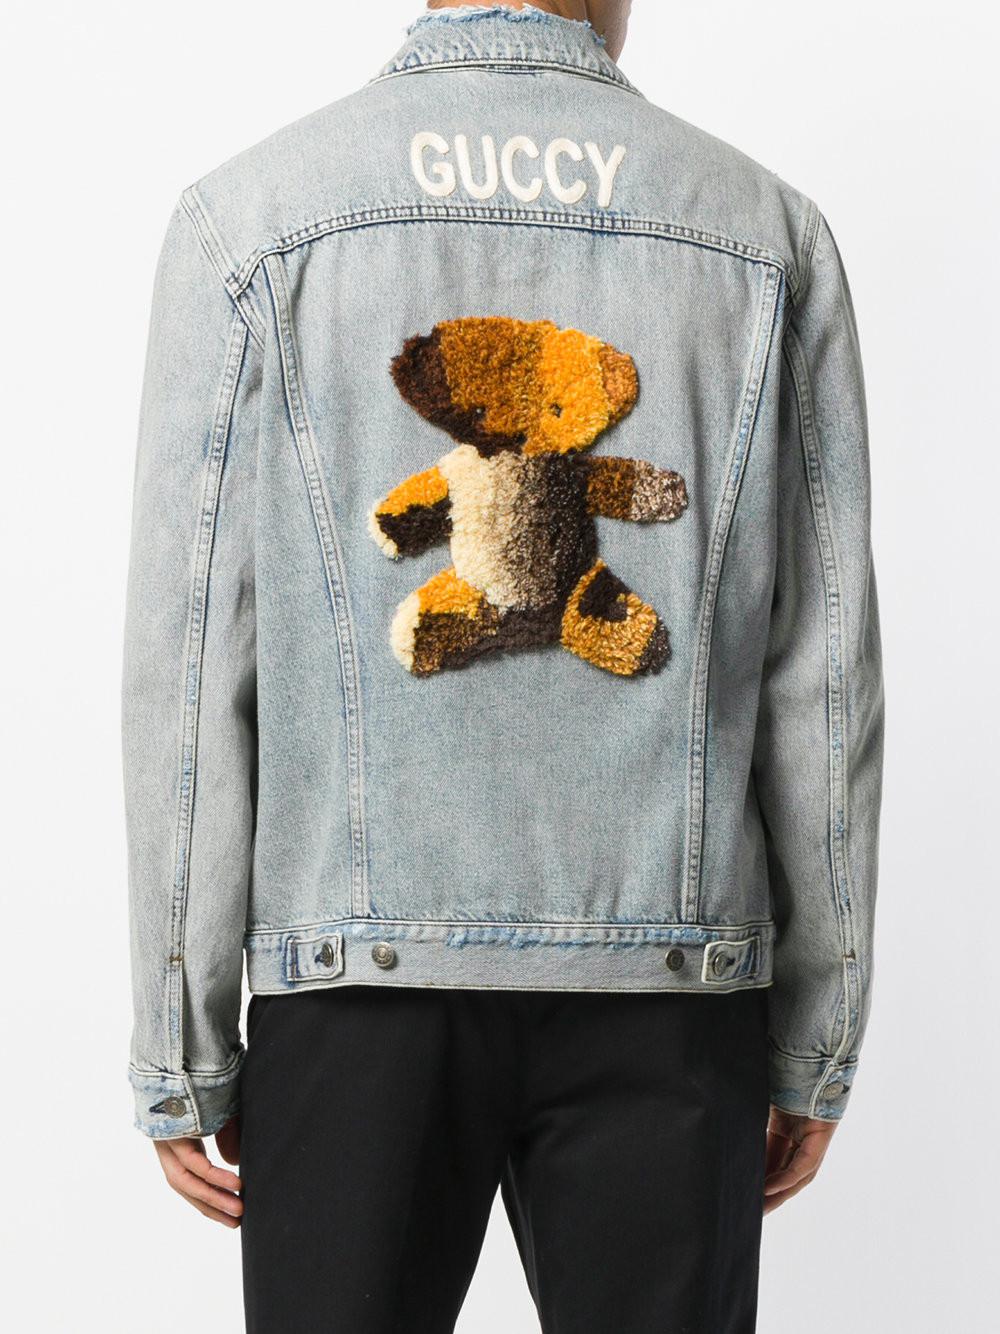 gucci jeans jacket teddy bear